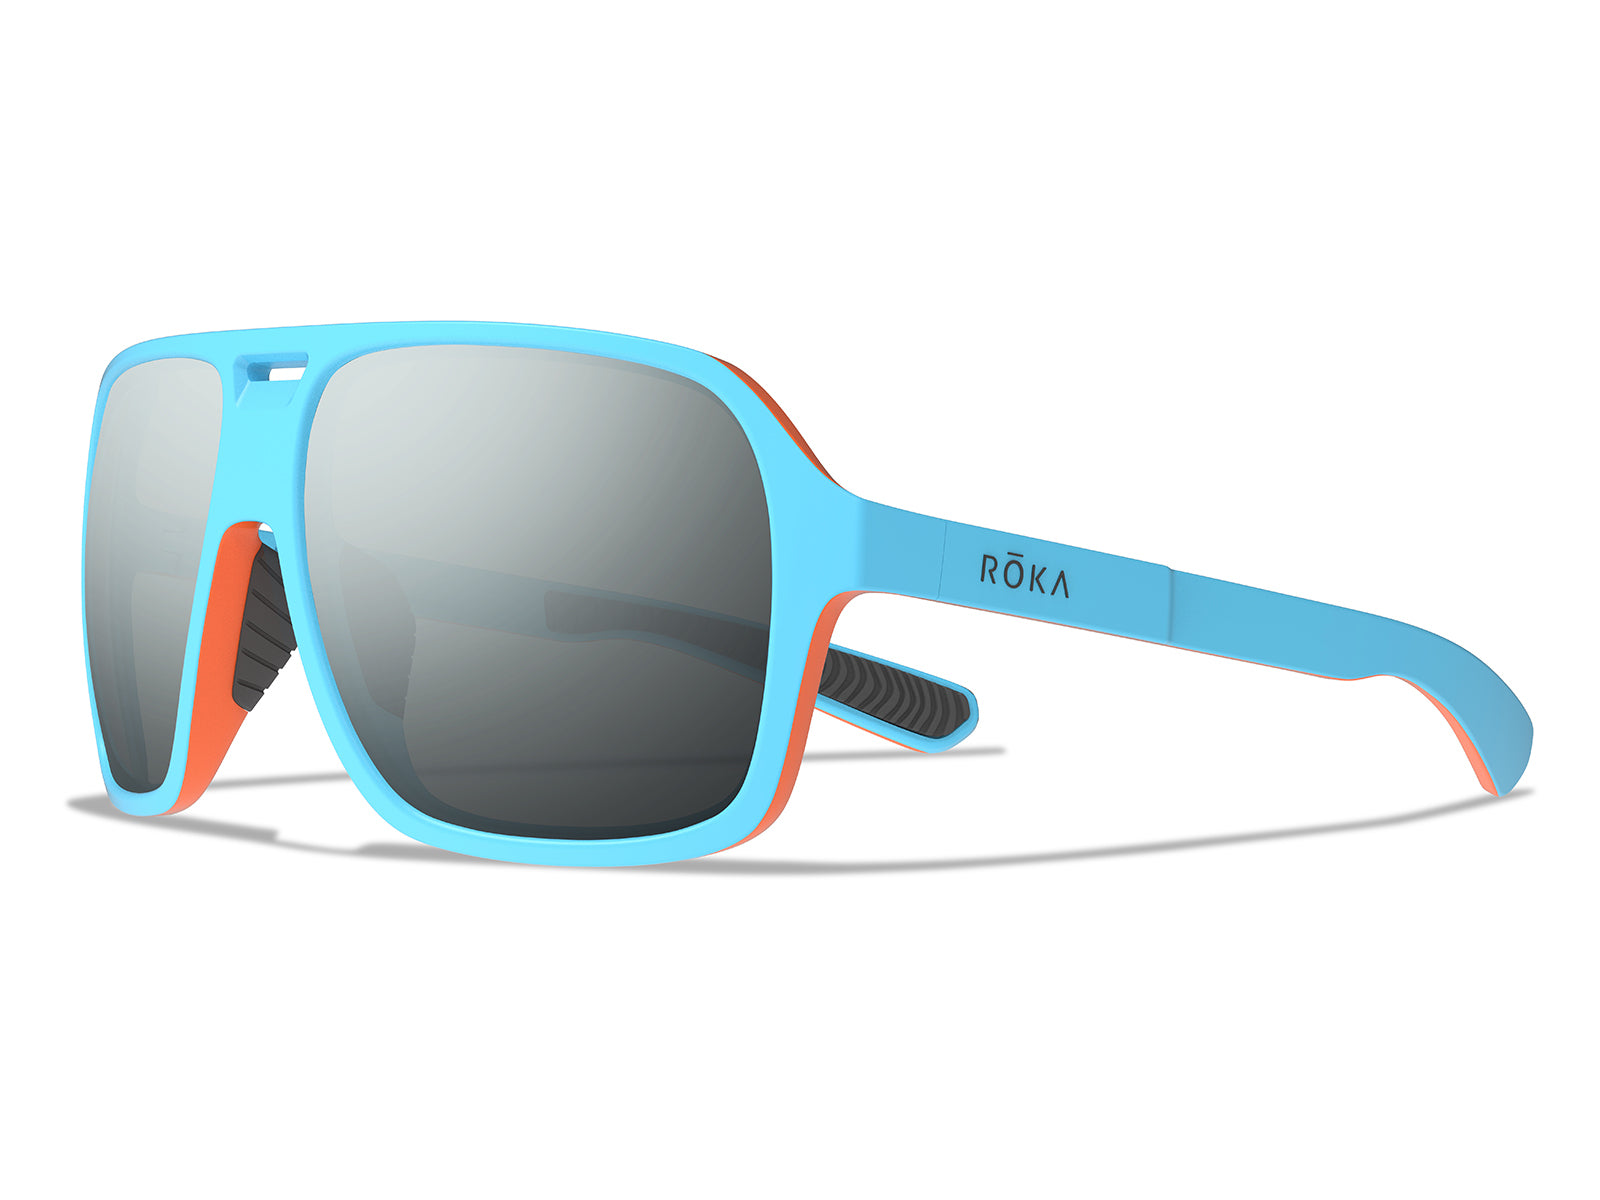 Torino Sunglasses - Retro Race-Inspired Sunglasses | ROKA